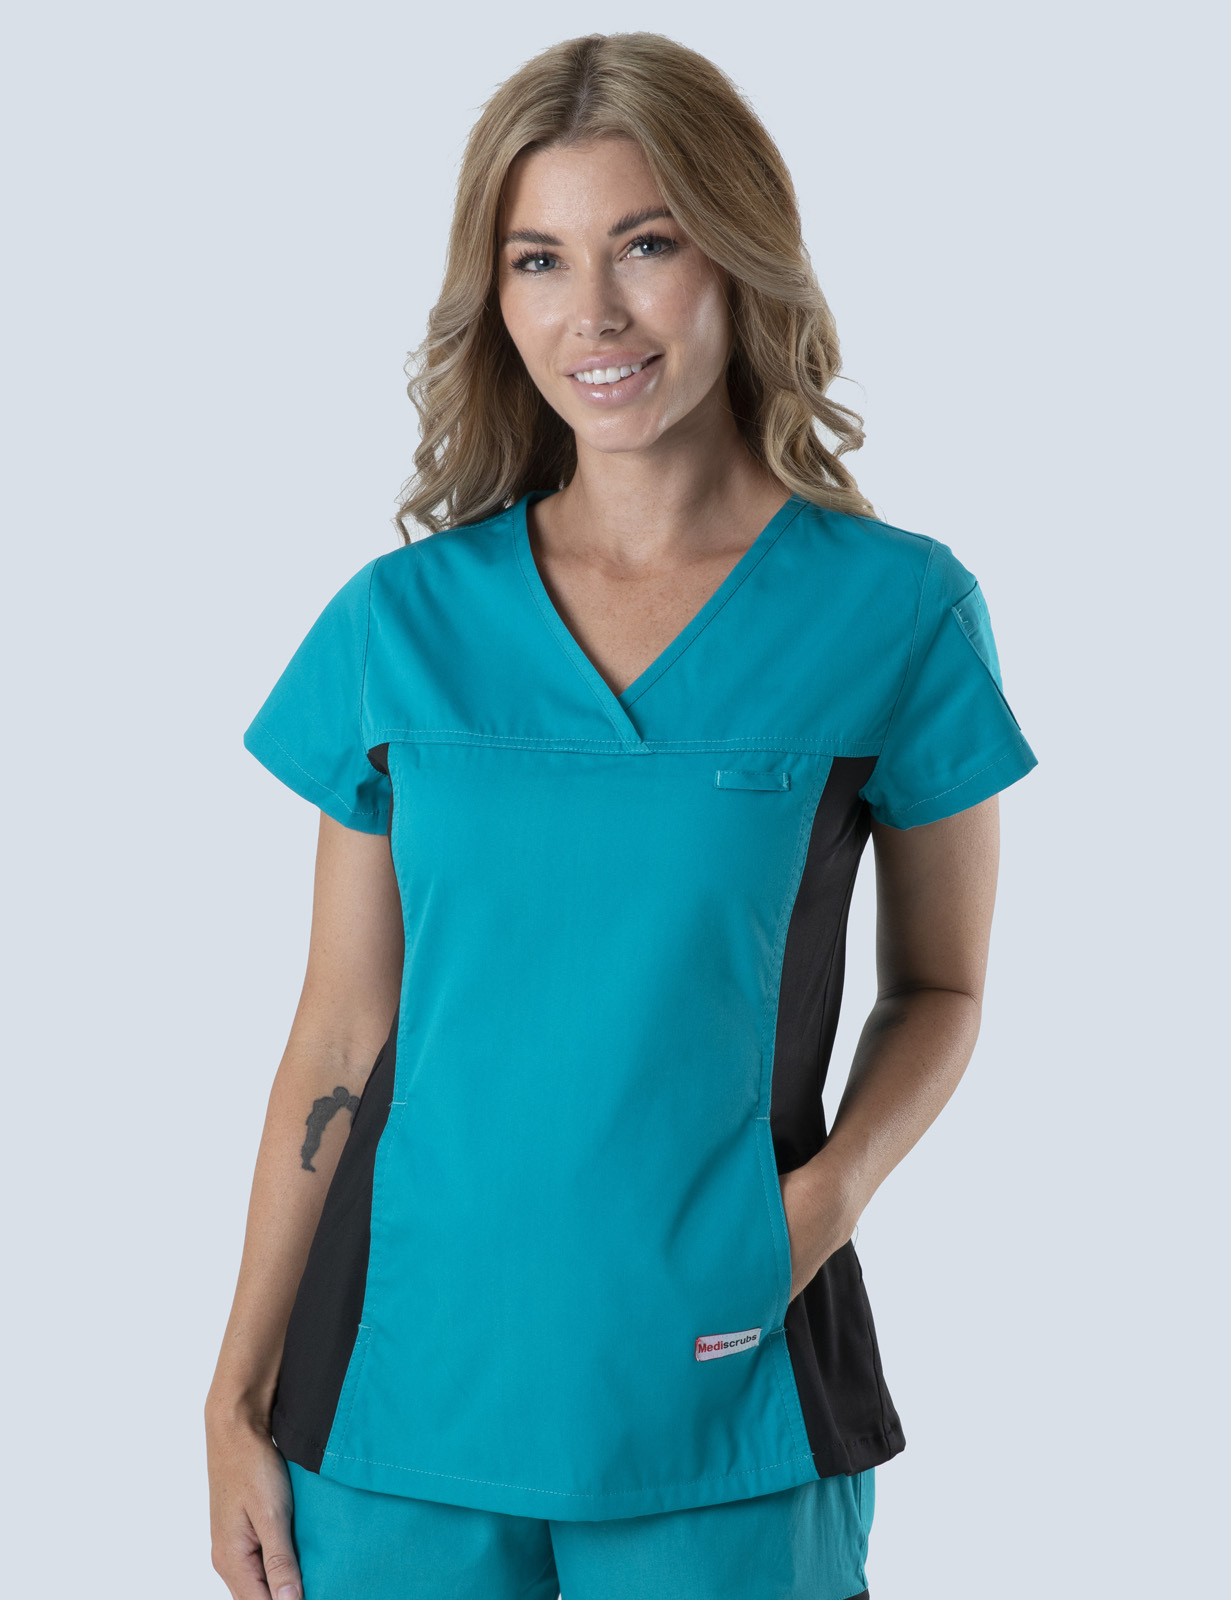 Ashmore Retreat Carer Uniform Top Only Bundle - (Women's Fit Spandex in Teal incl Logo) 